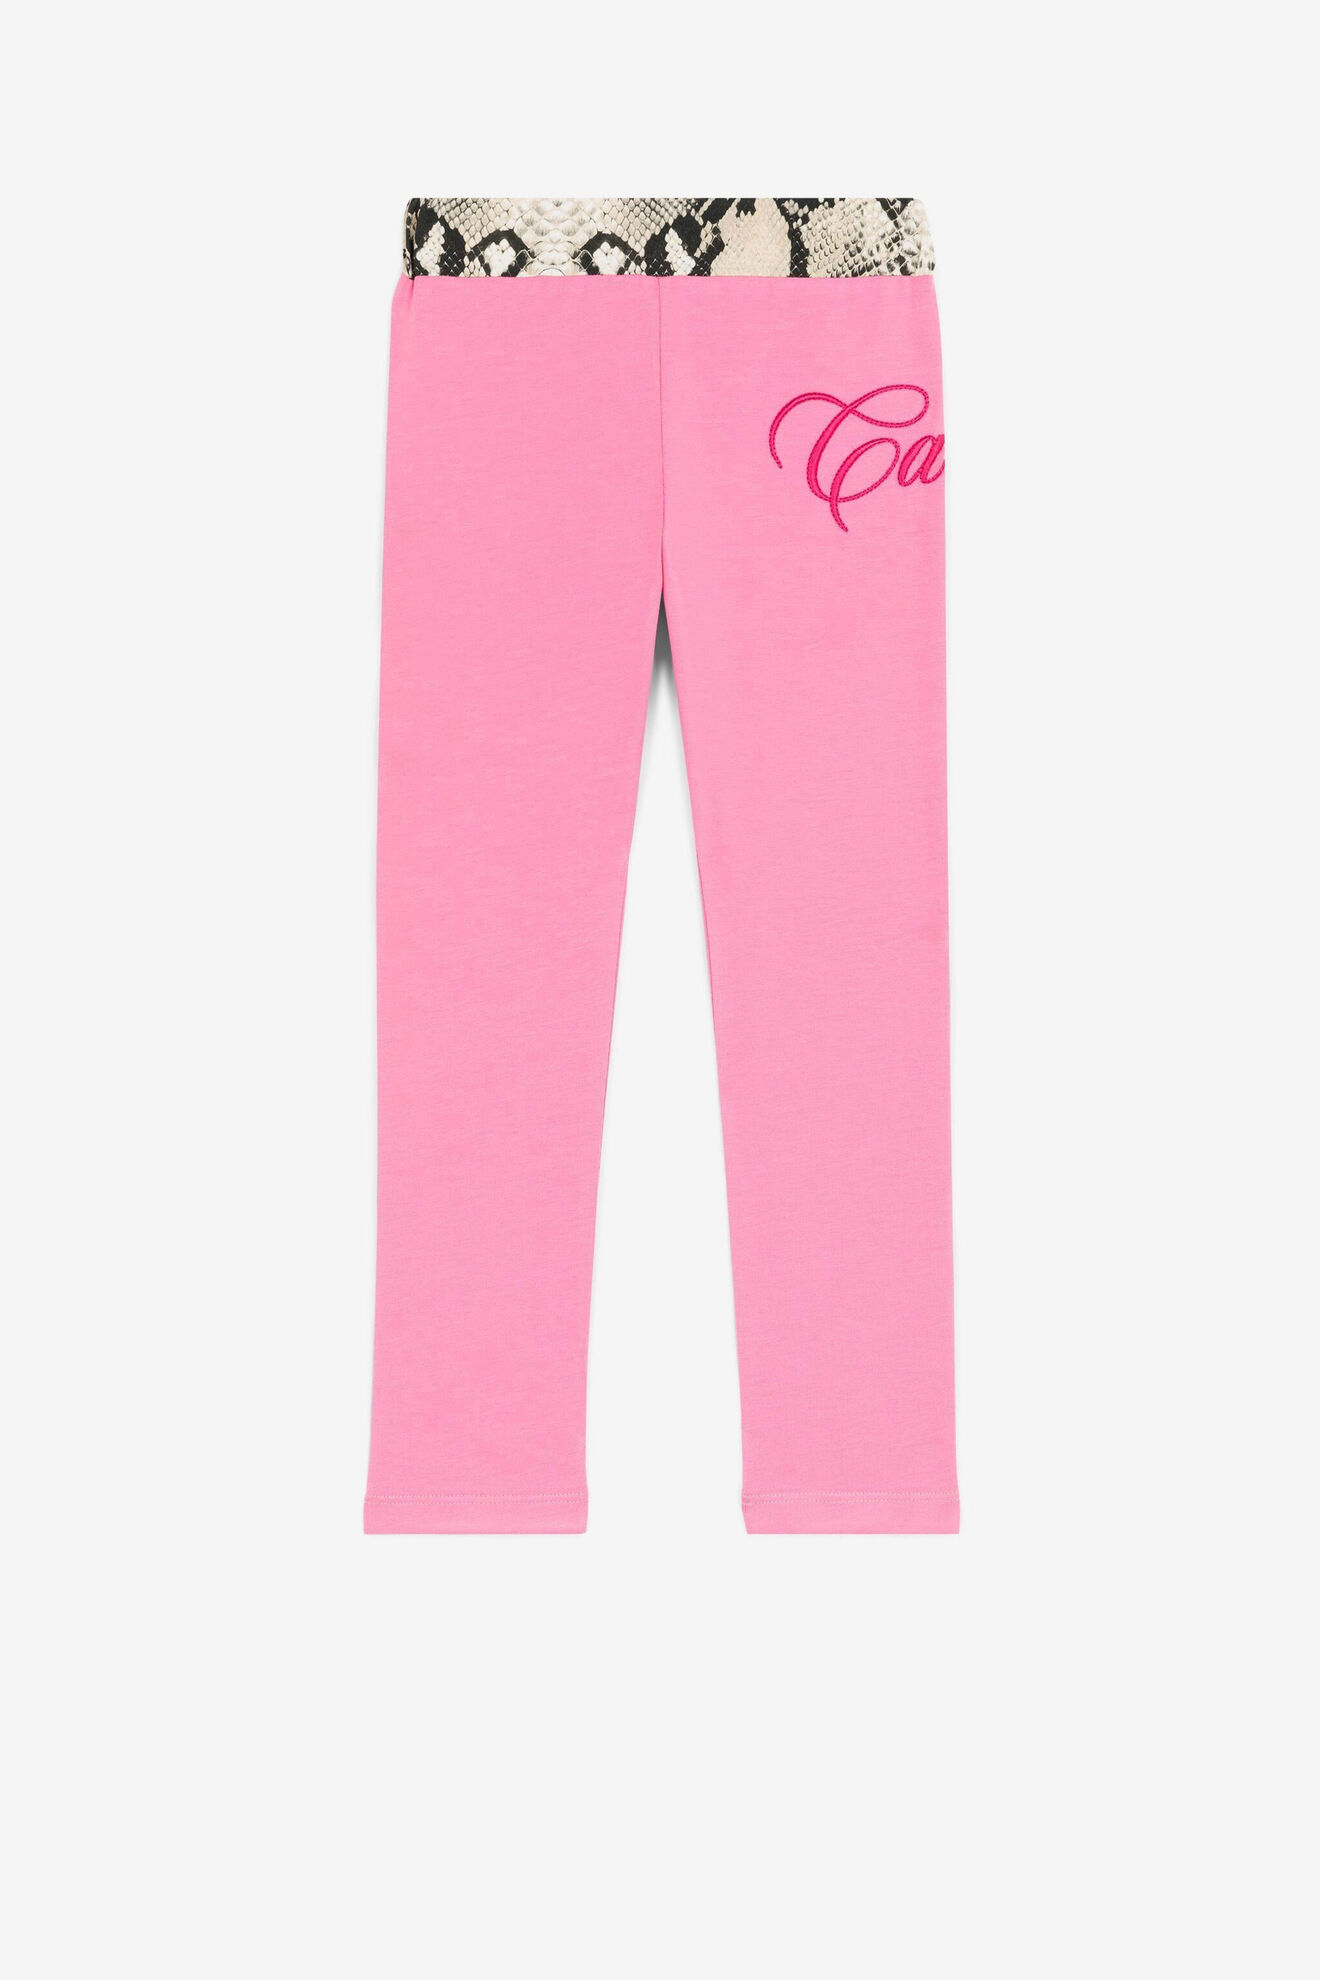 Roberto Cavalli Pink Shock & Baby Pink Leggings –